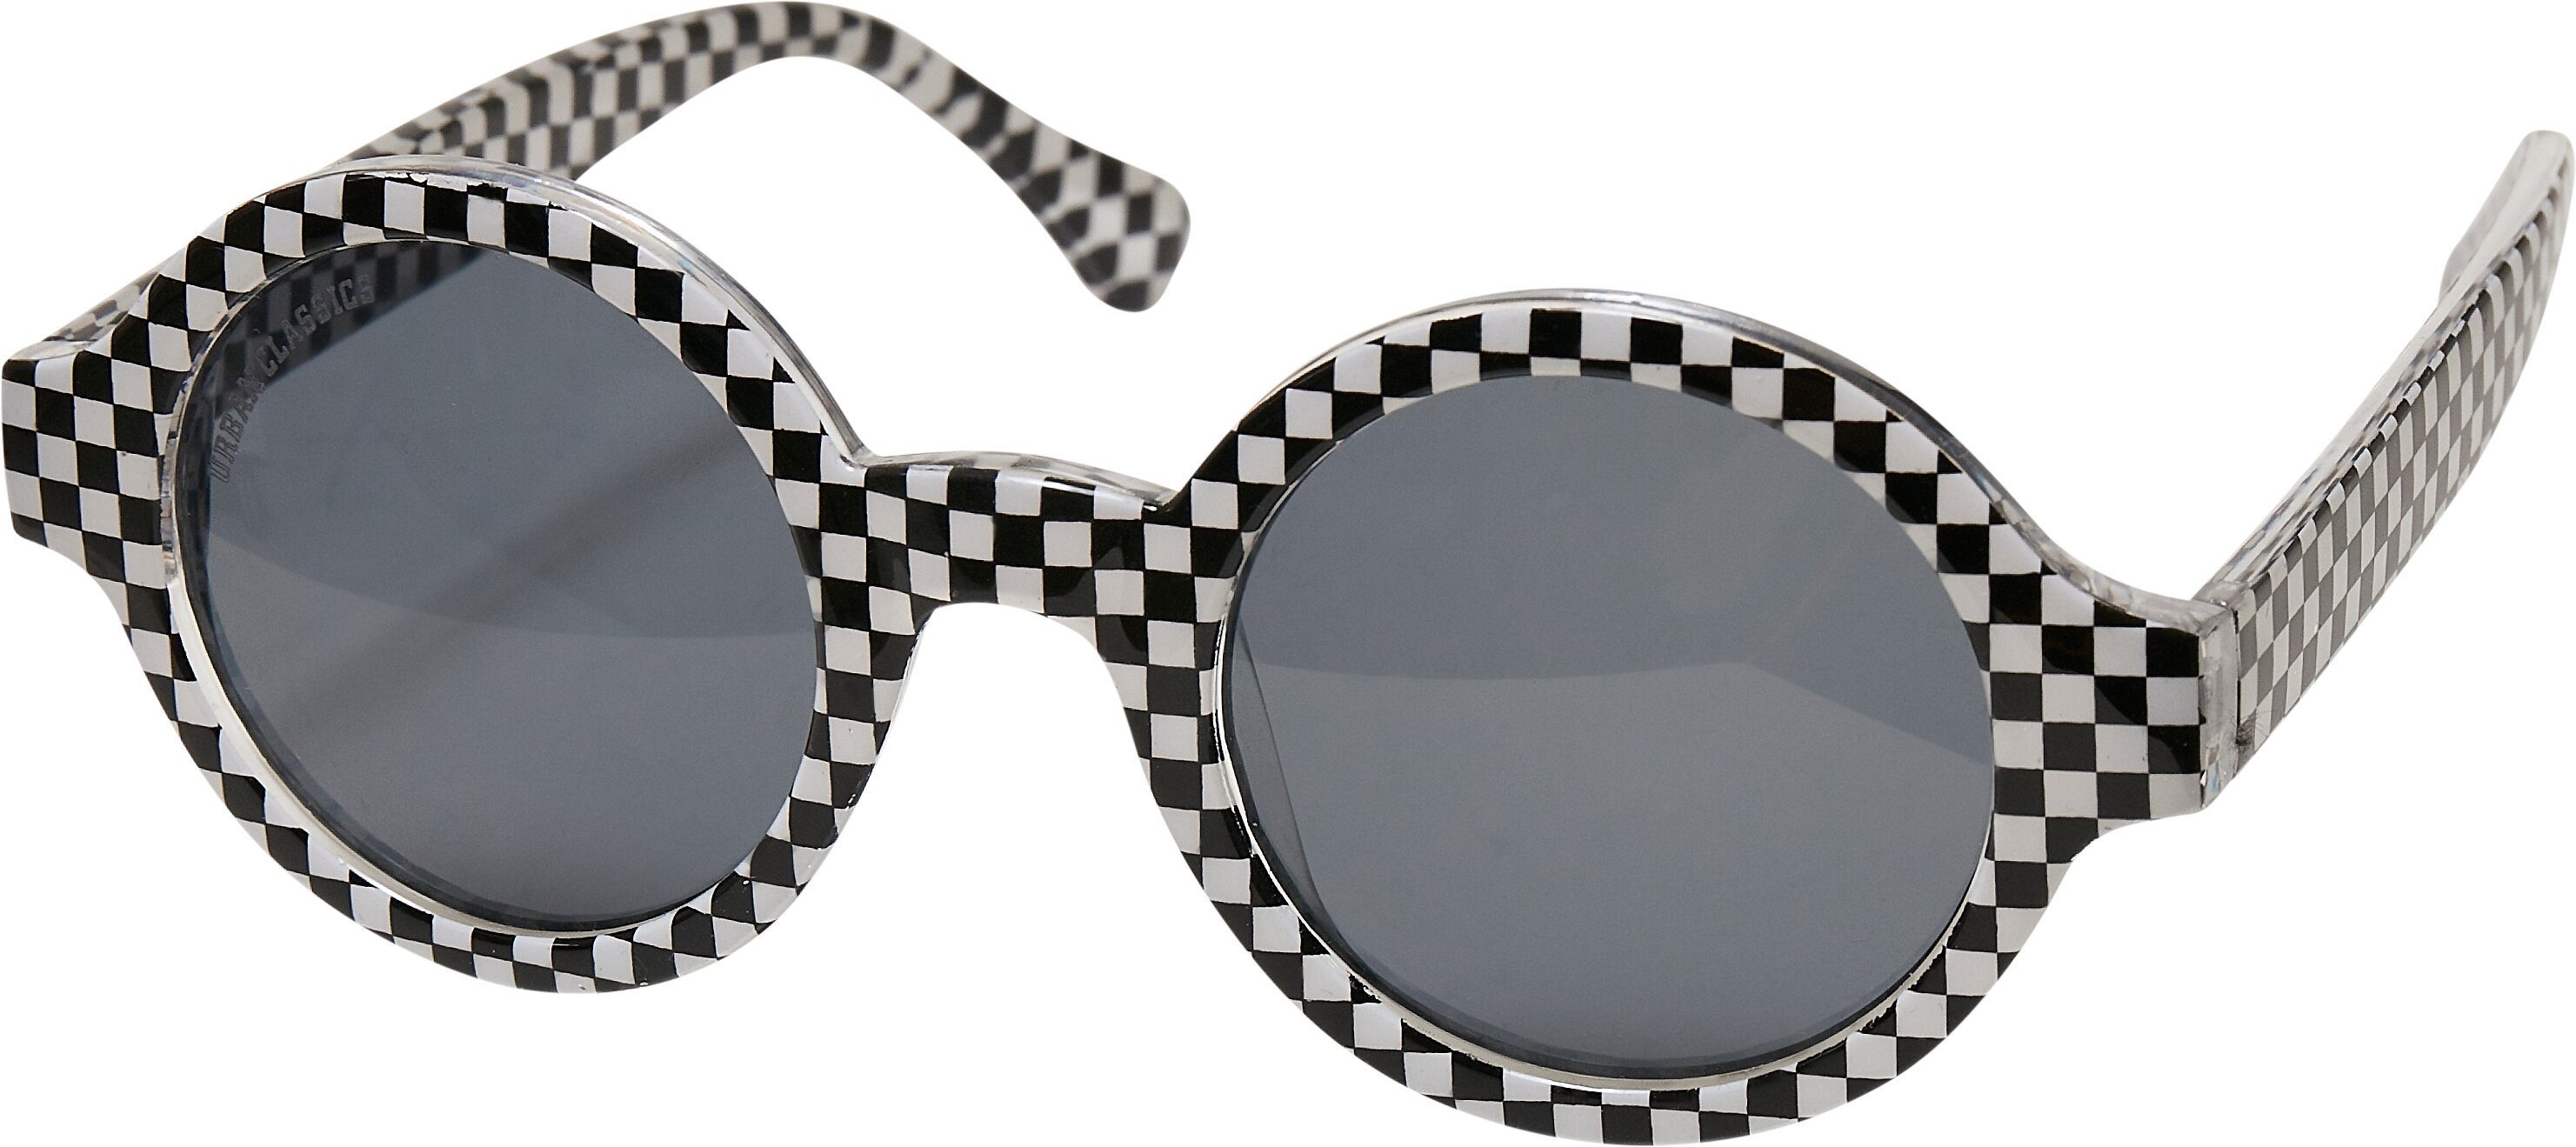 Funk CLASSICS Sunglasses URBAN Sonnenbrille UC black/white Accessoires Retro